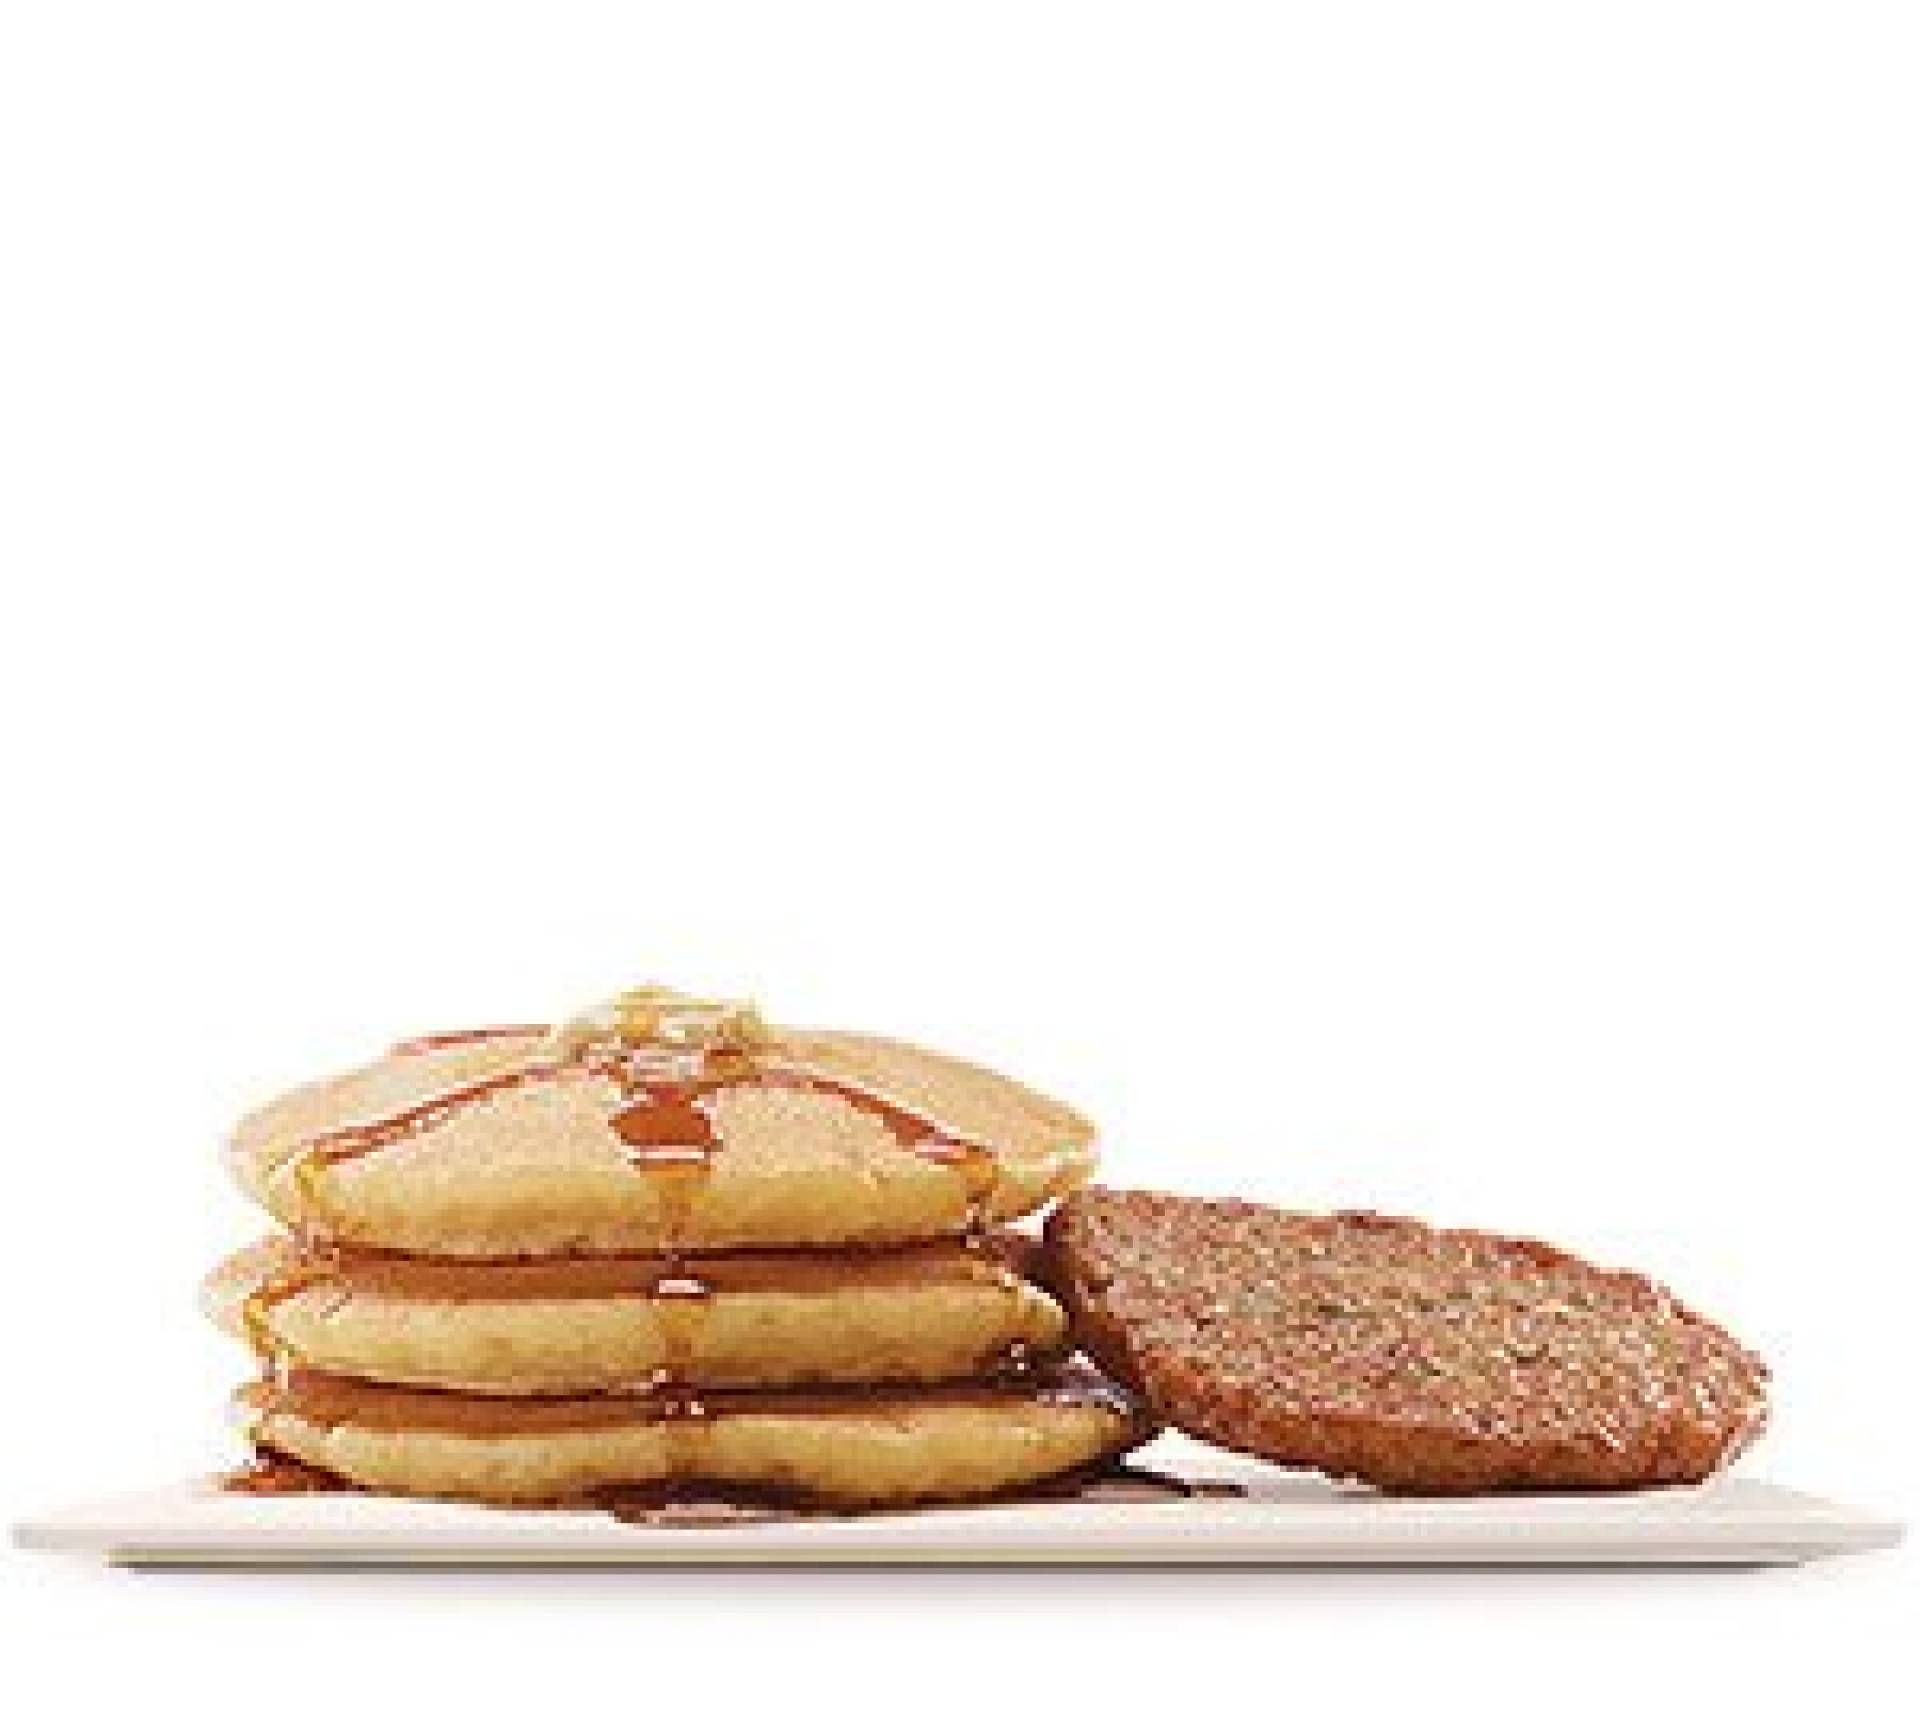 Pancake with Turkey Sausage & Sugar Free Syrup